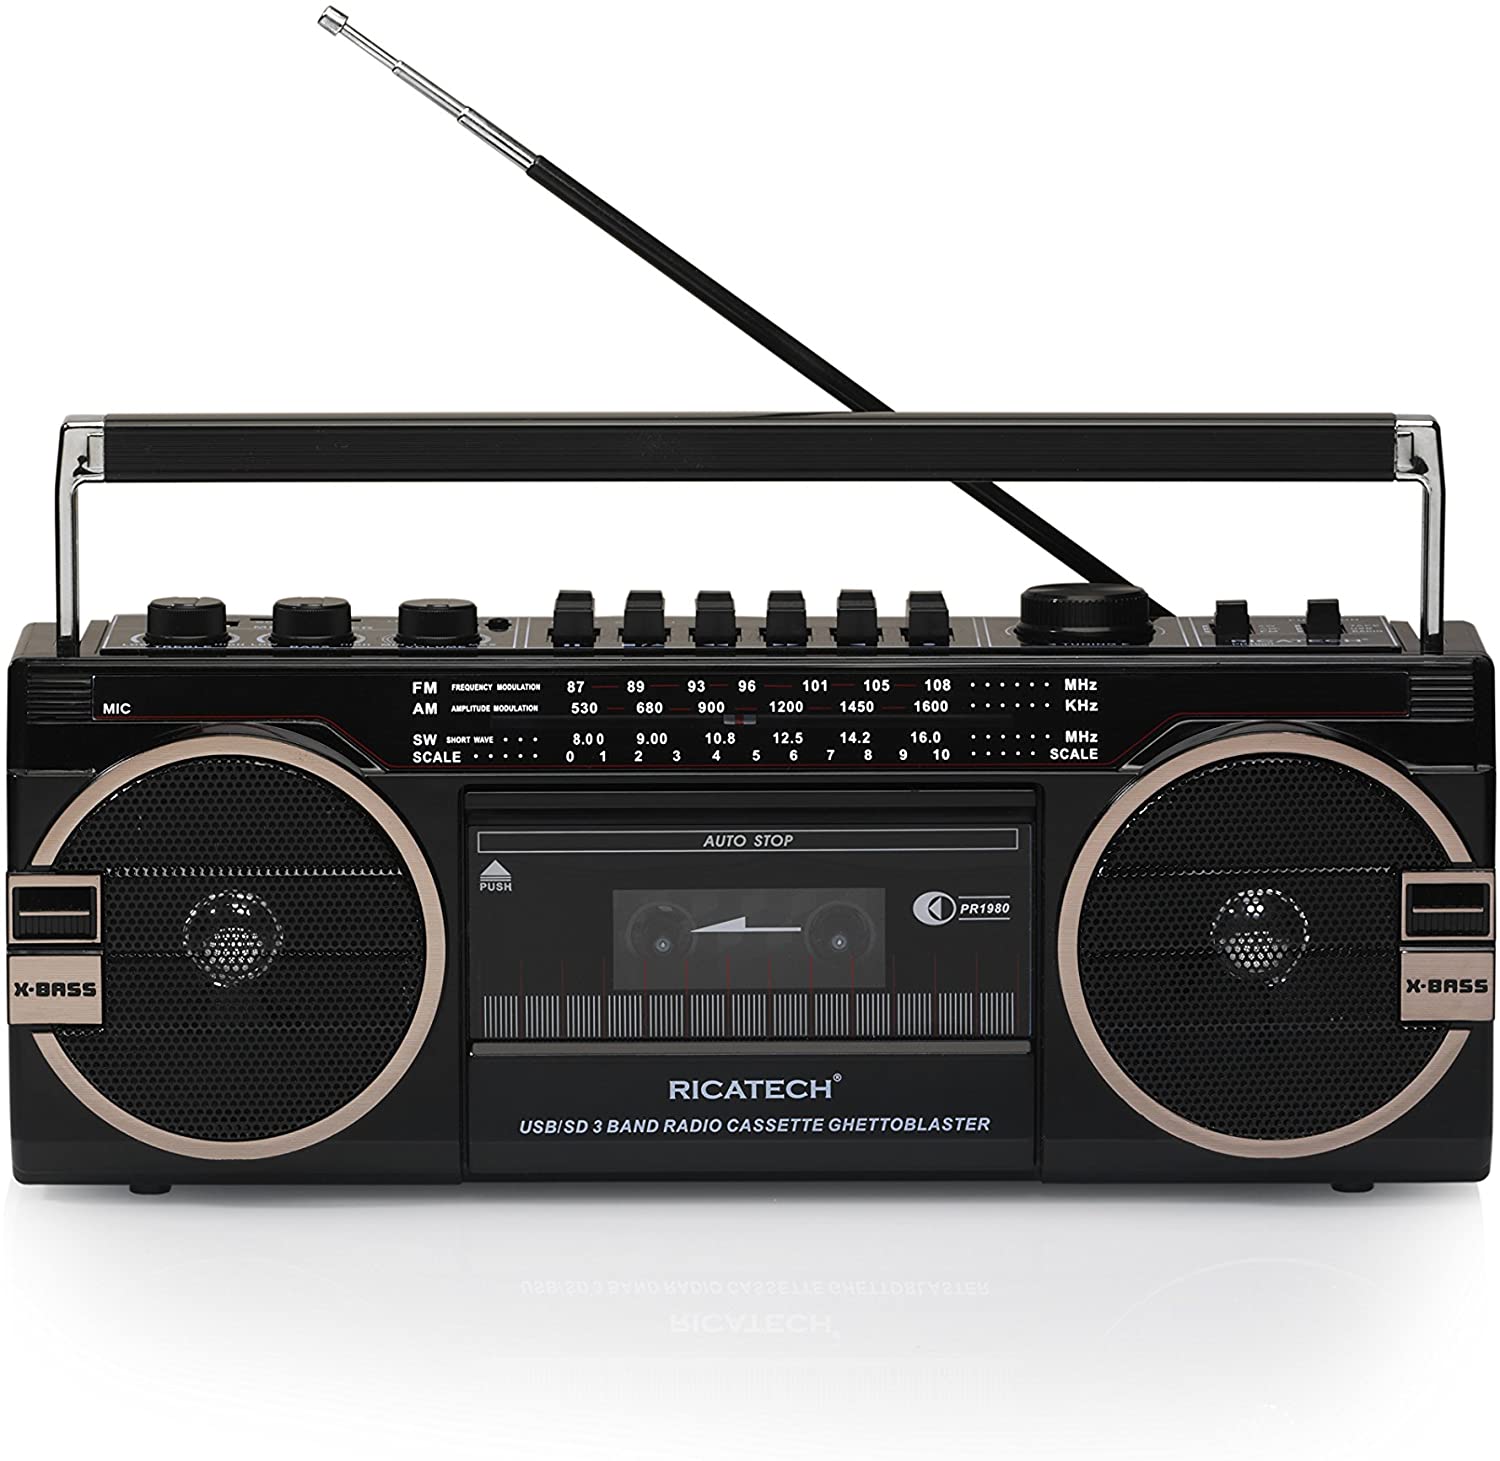 Ghettoblaster - Radio, USB, Cassette, (PR1980)